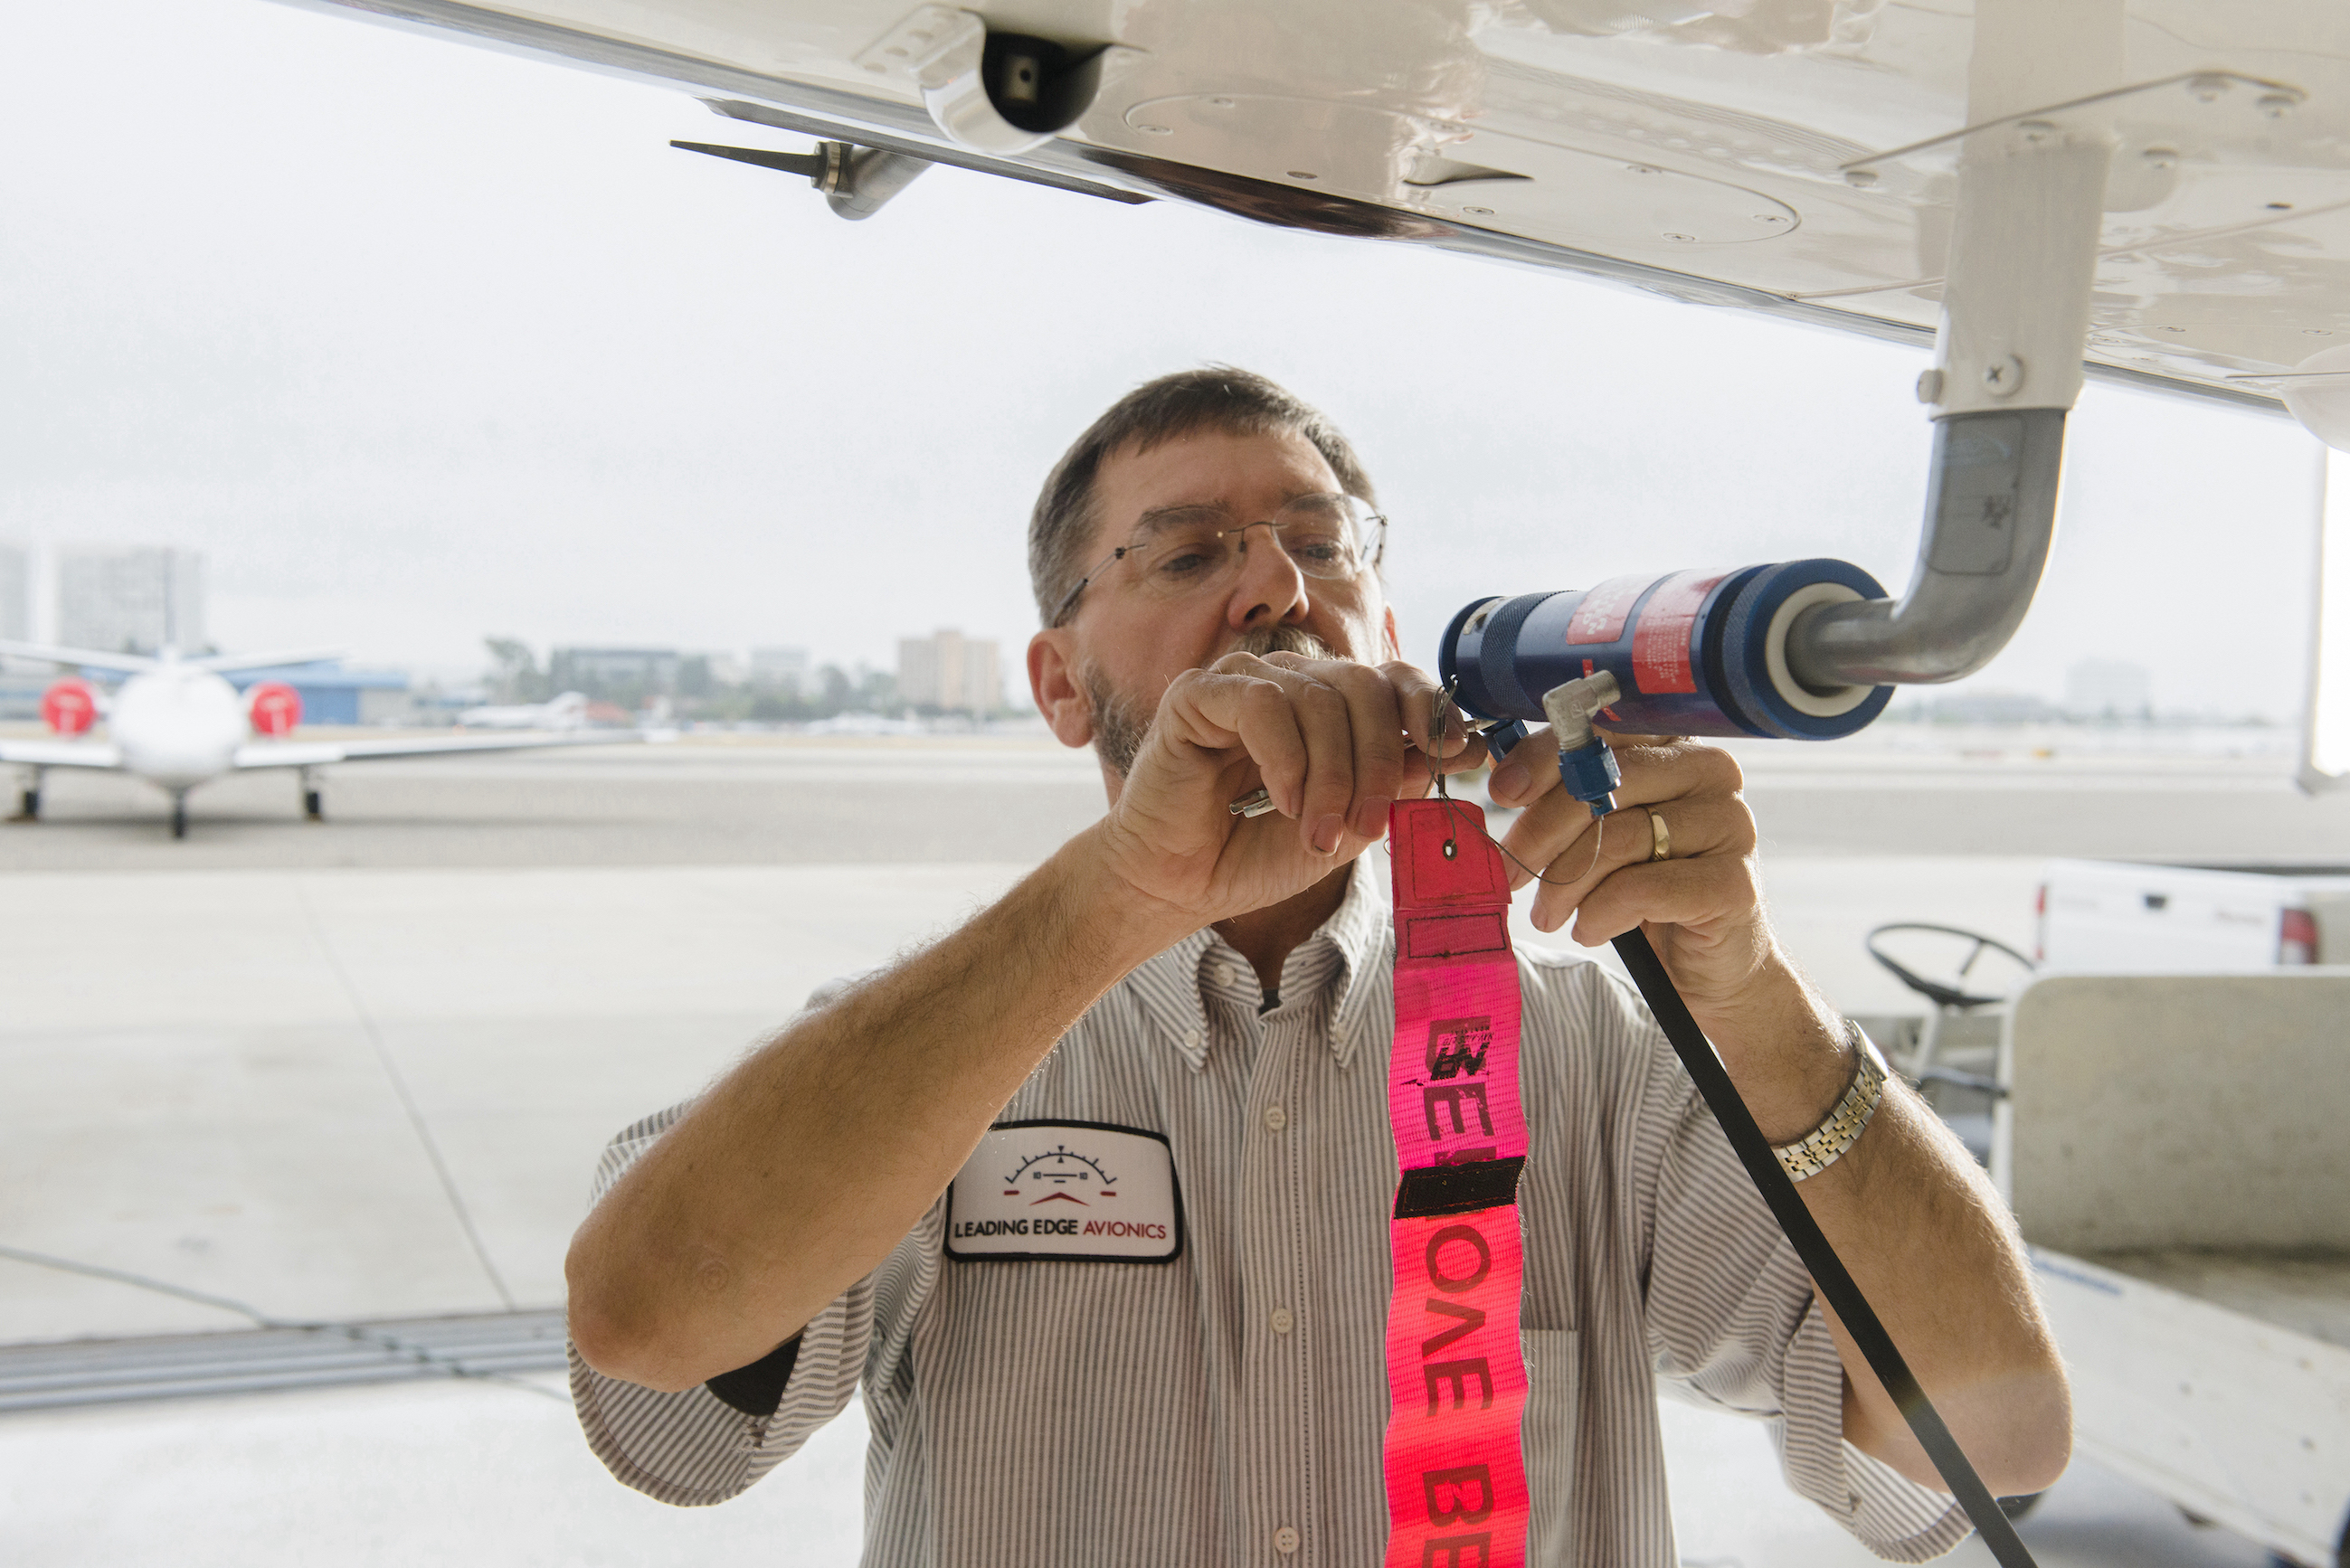 One of Leading Edge Avionics' Expert Technicians at work.